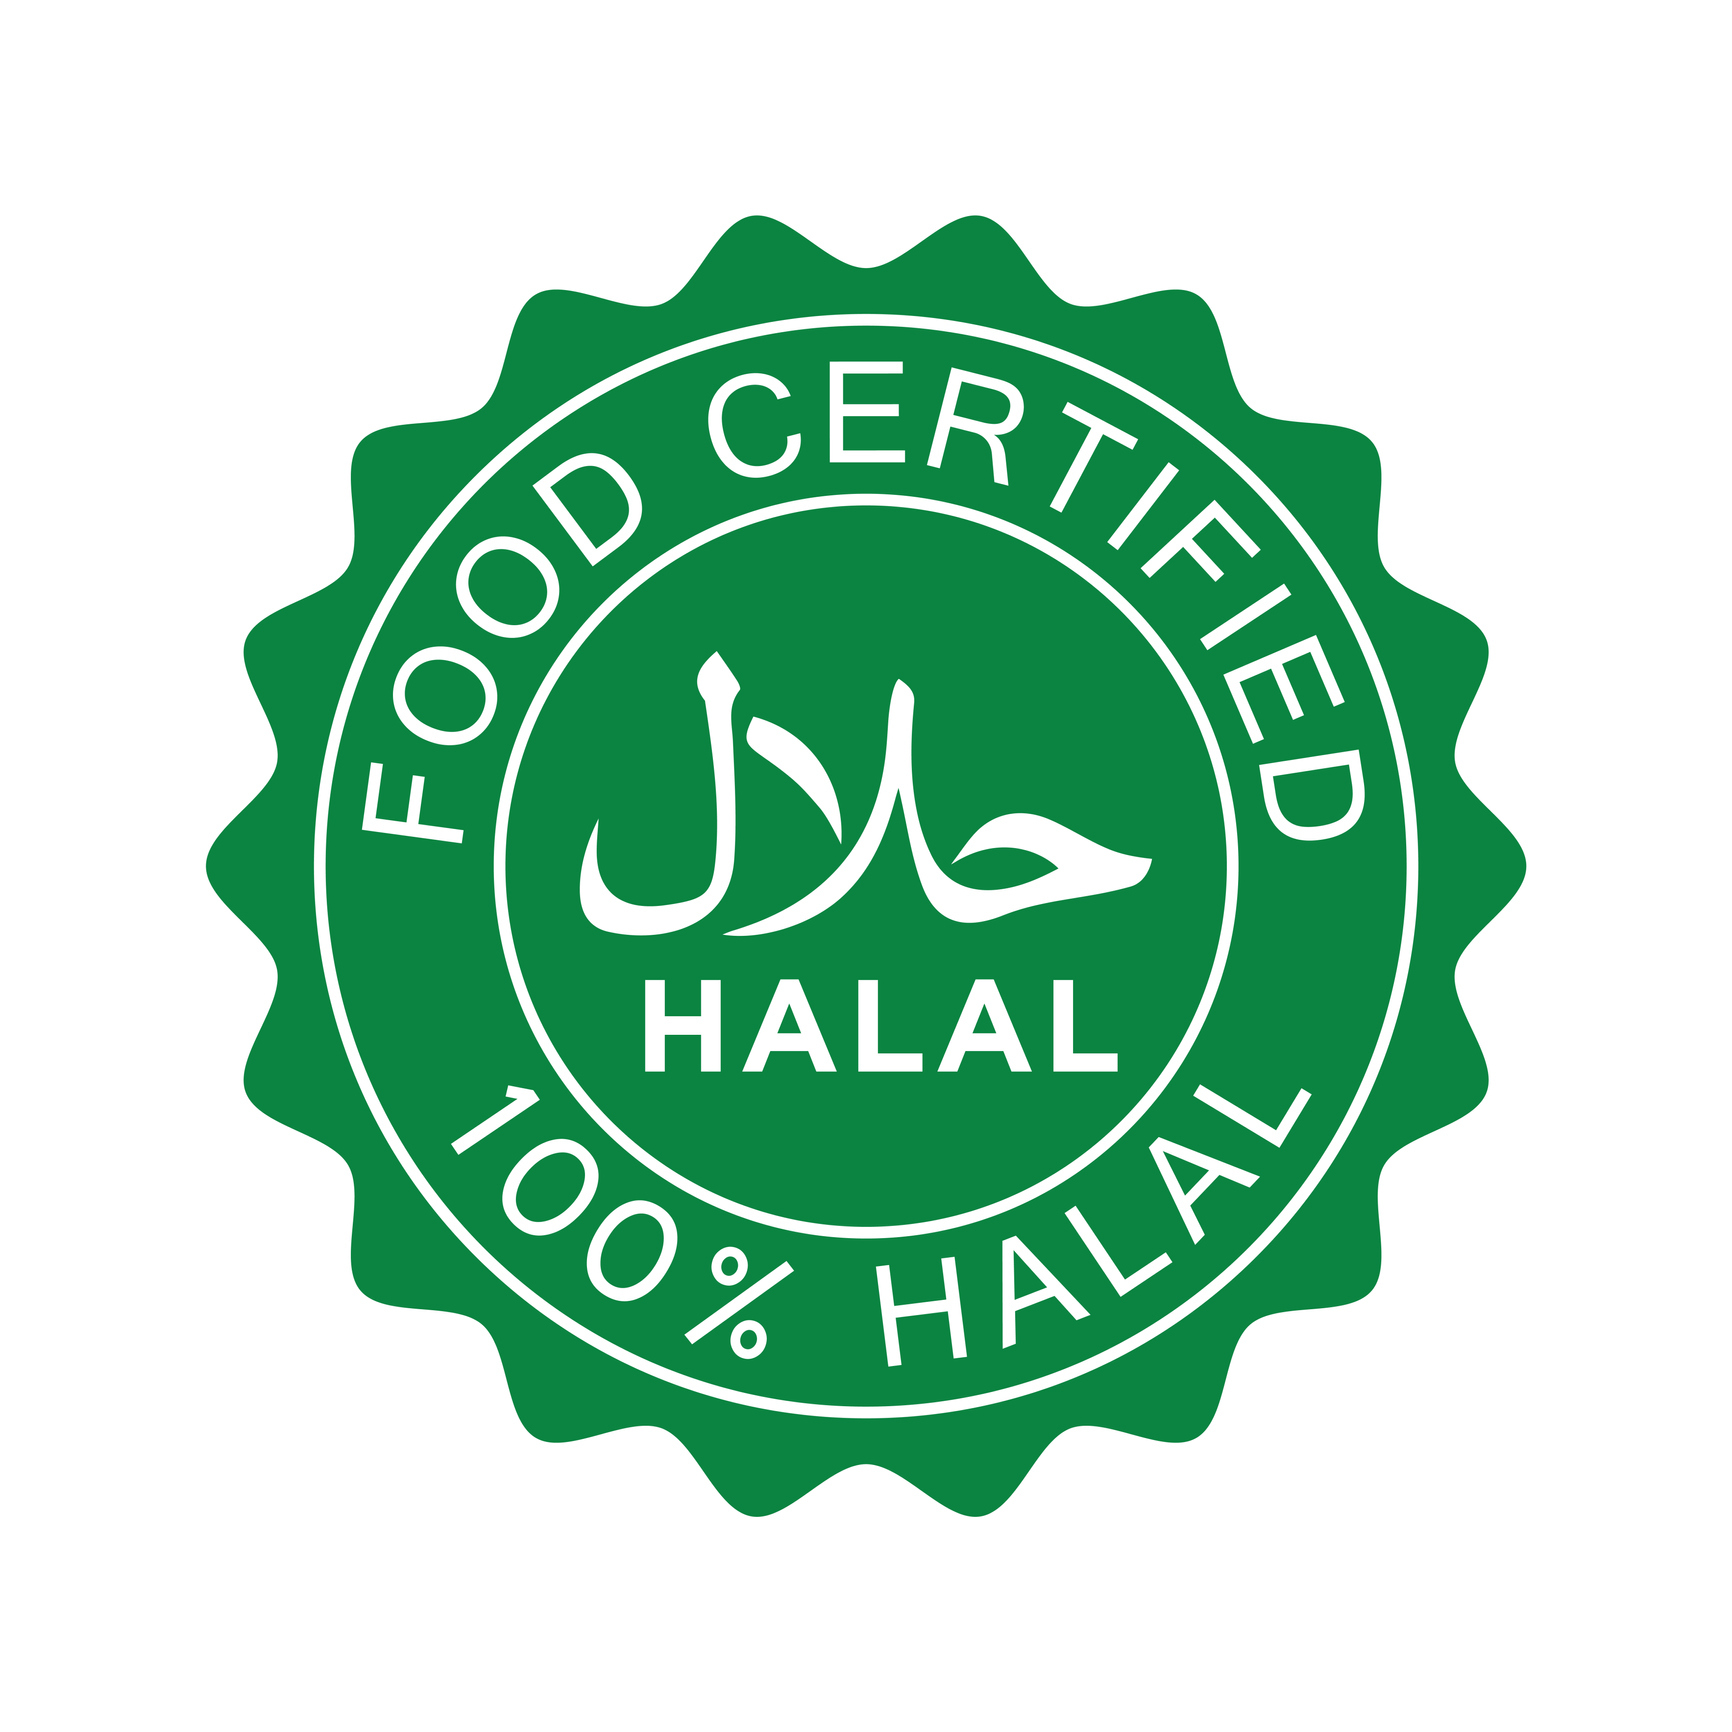 Halal-friendly Minnesota